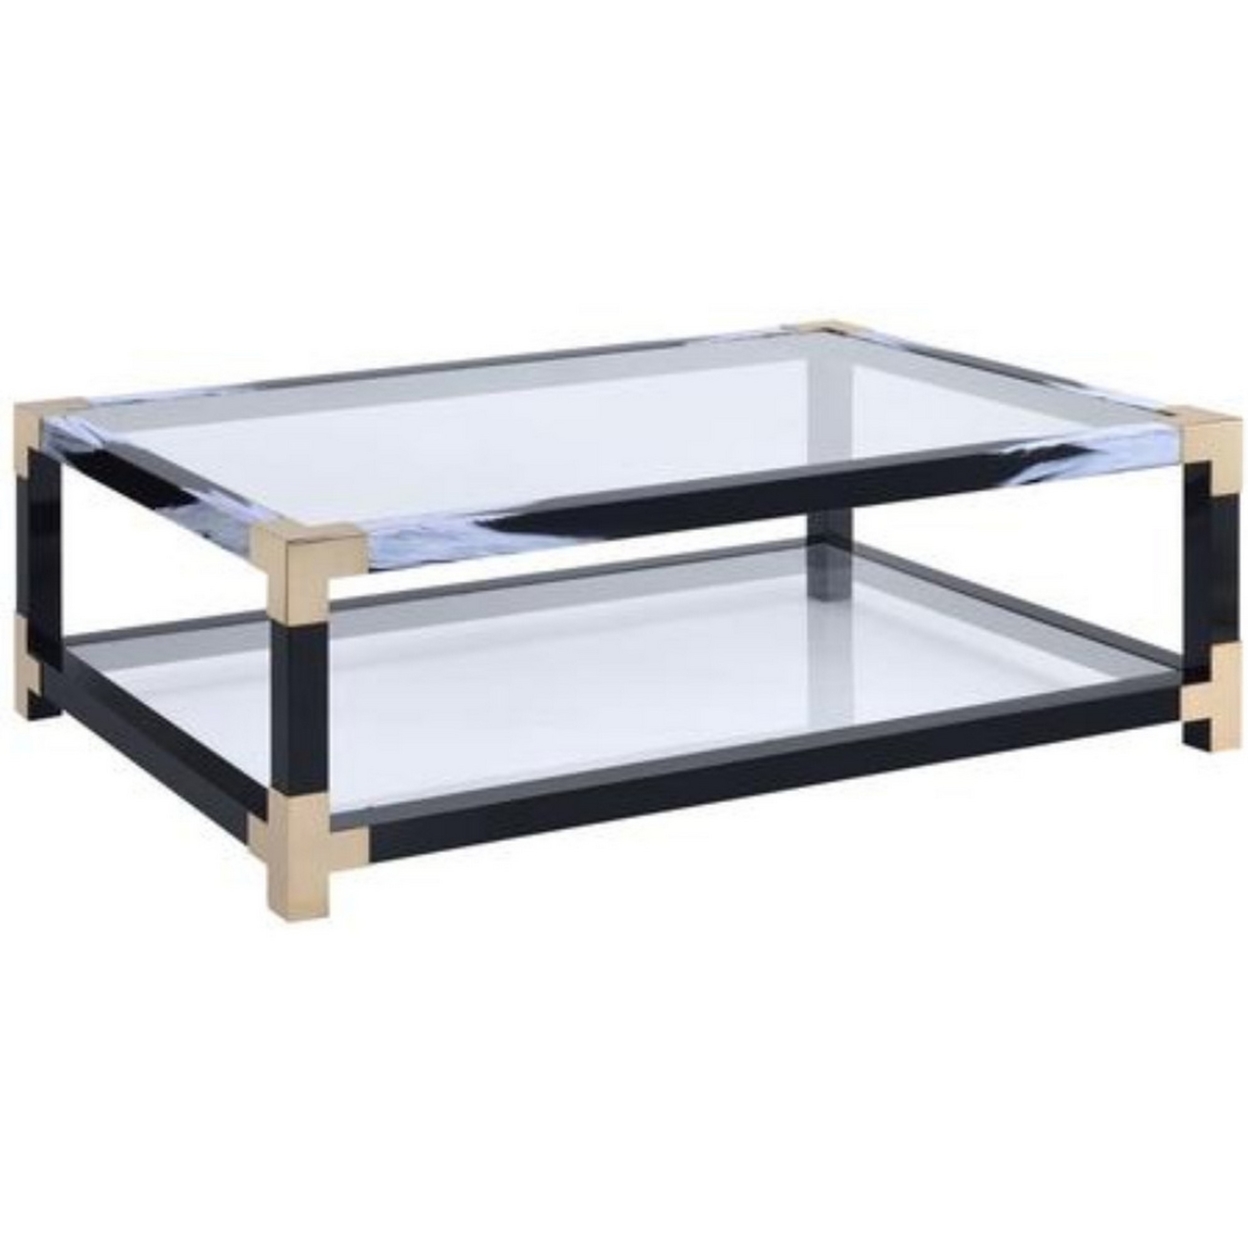 Rectangular Metal Coffee Table With Glass Top And Shelf, Black- Saltoro Sherpi